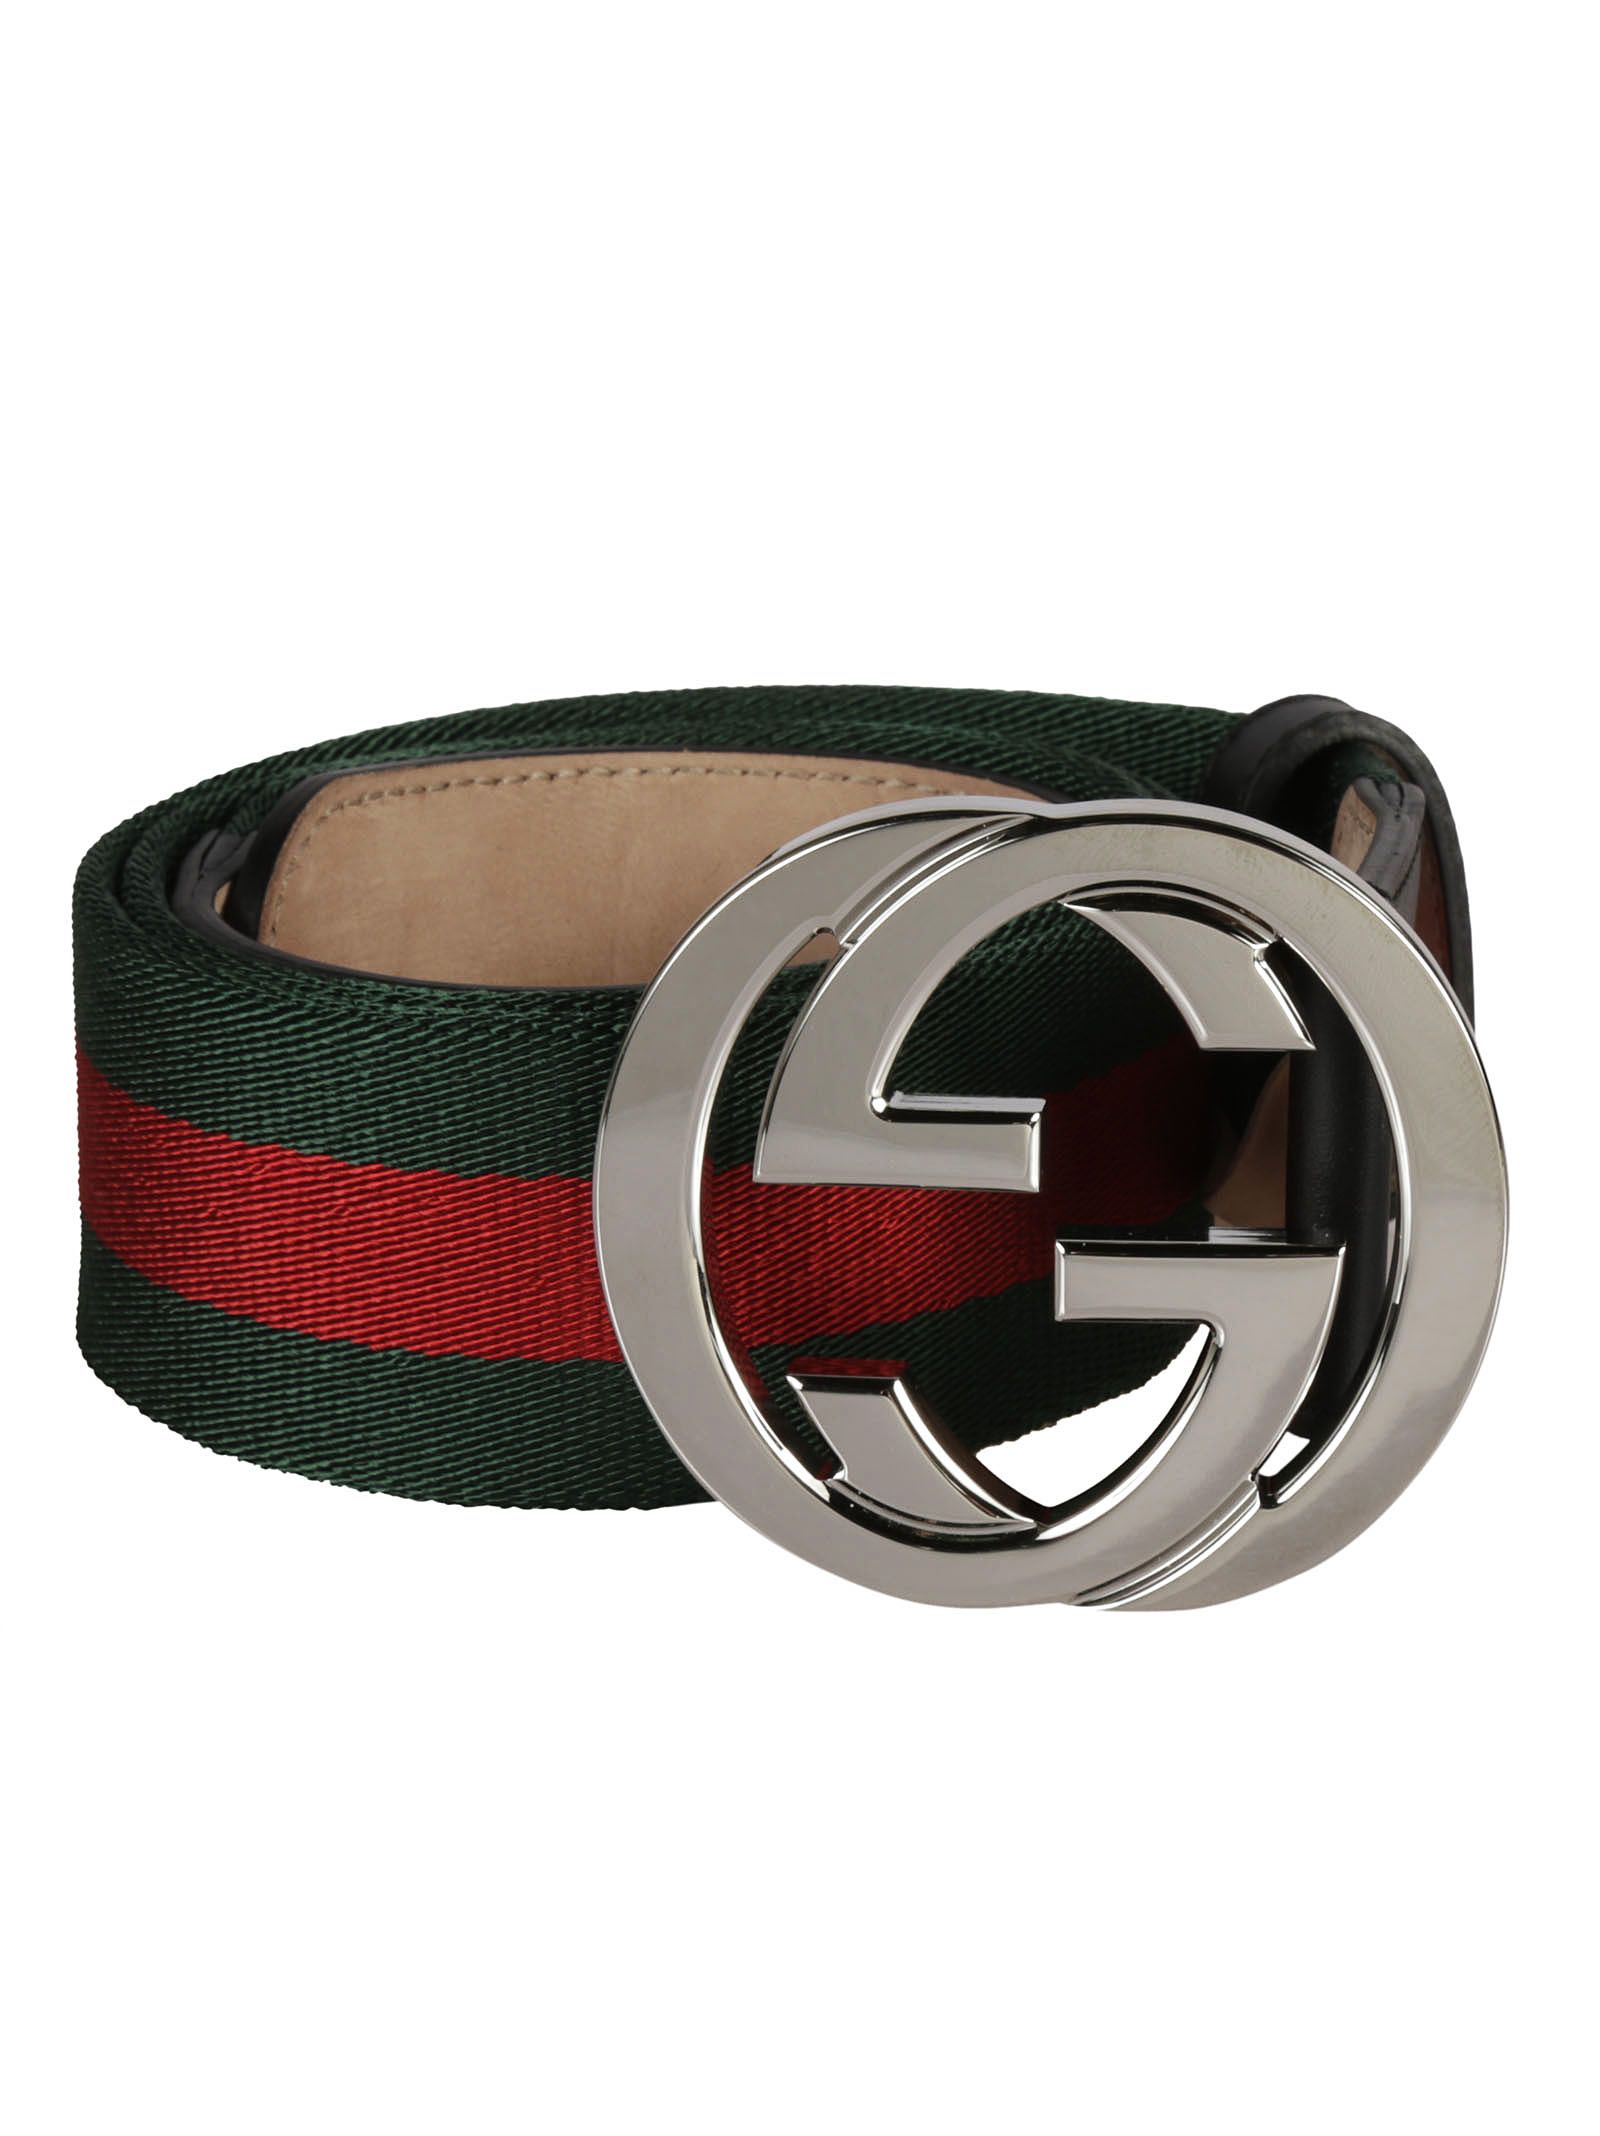 Gucci - Gucci Web Stripe GG Buckle Belt - Green/Red, Men's Belts | Italist